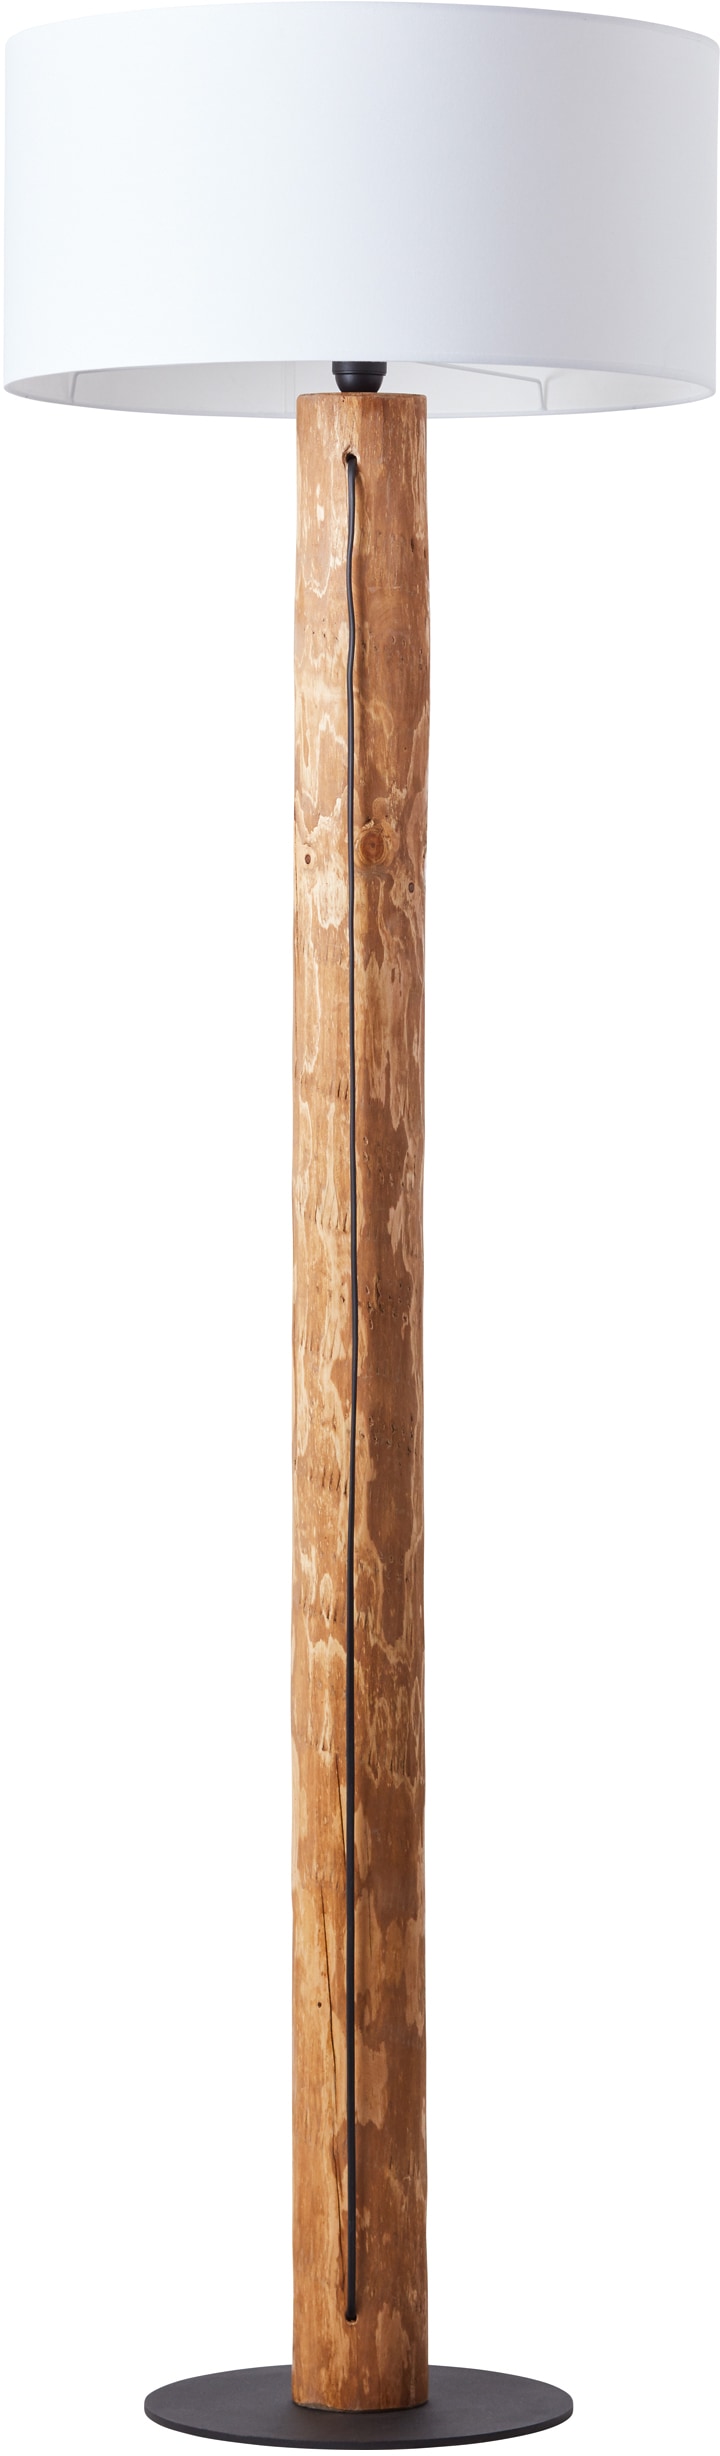 Brilliant Stehlampe »Jimena«, 1 flammig-flammig, Stoffschirm, H 164 cm, Ø 50 cm, E27, Holz/Textil, kiefer gebeizt/weiß